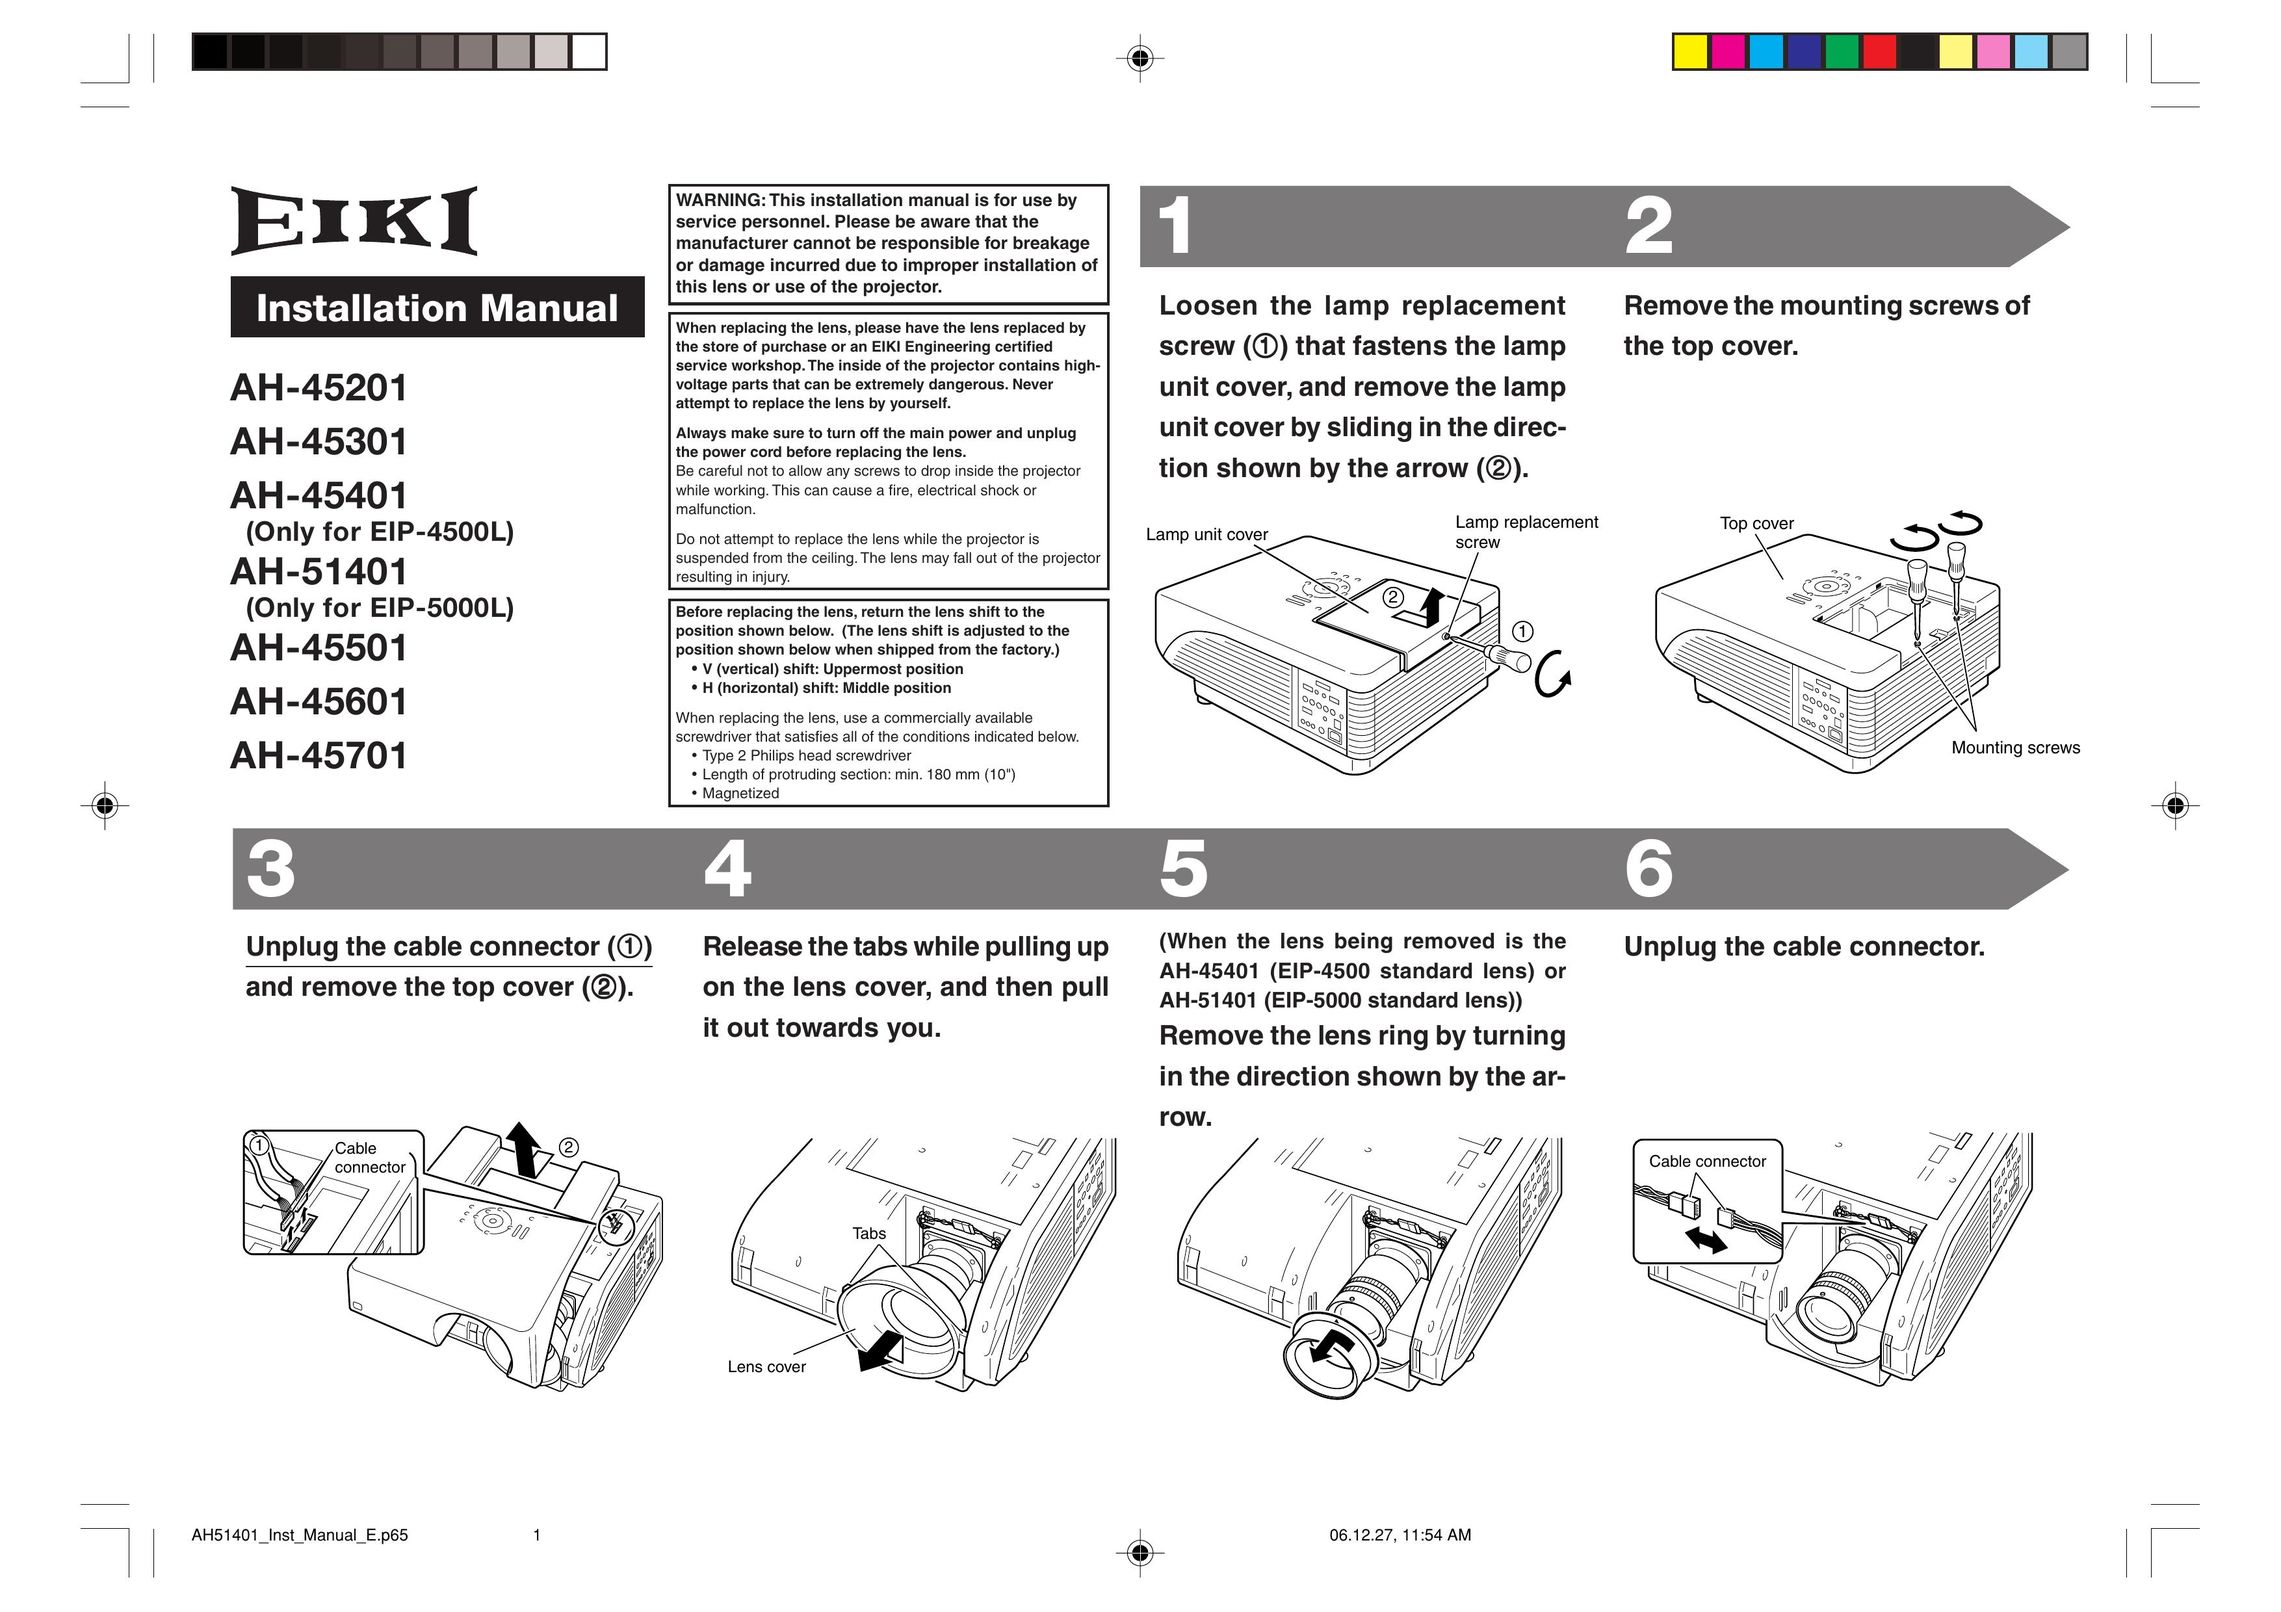 Eiki AH-45701 Projector User Manual